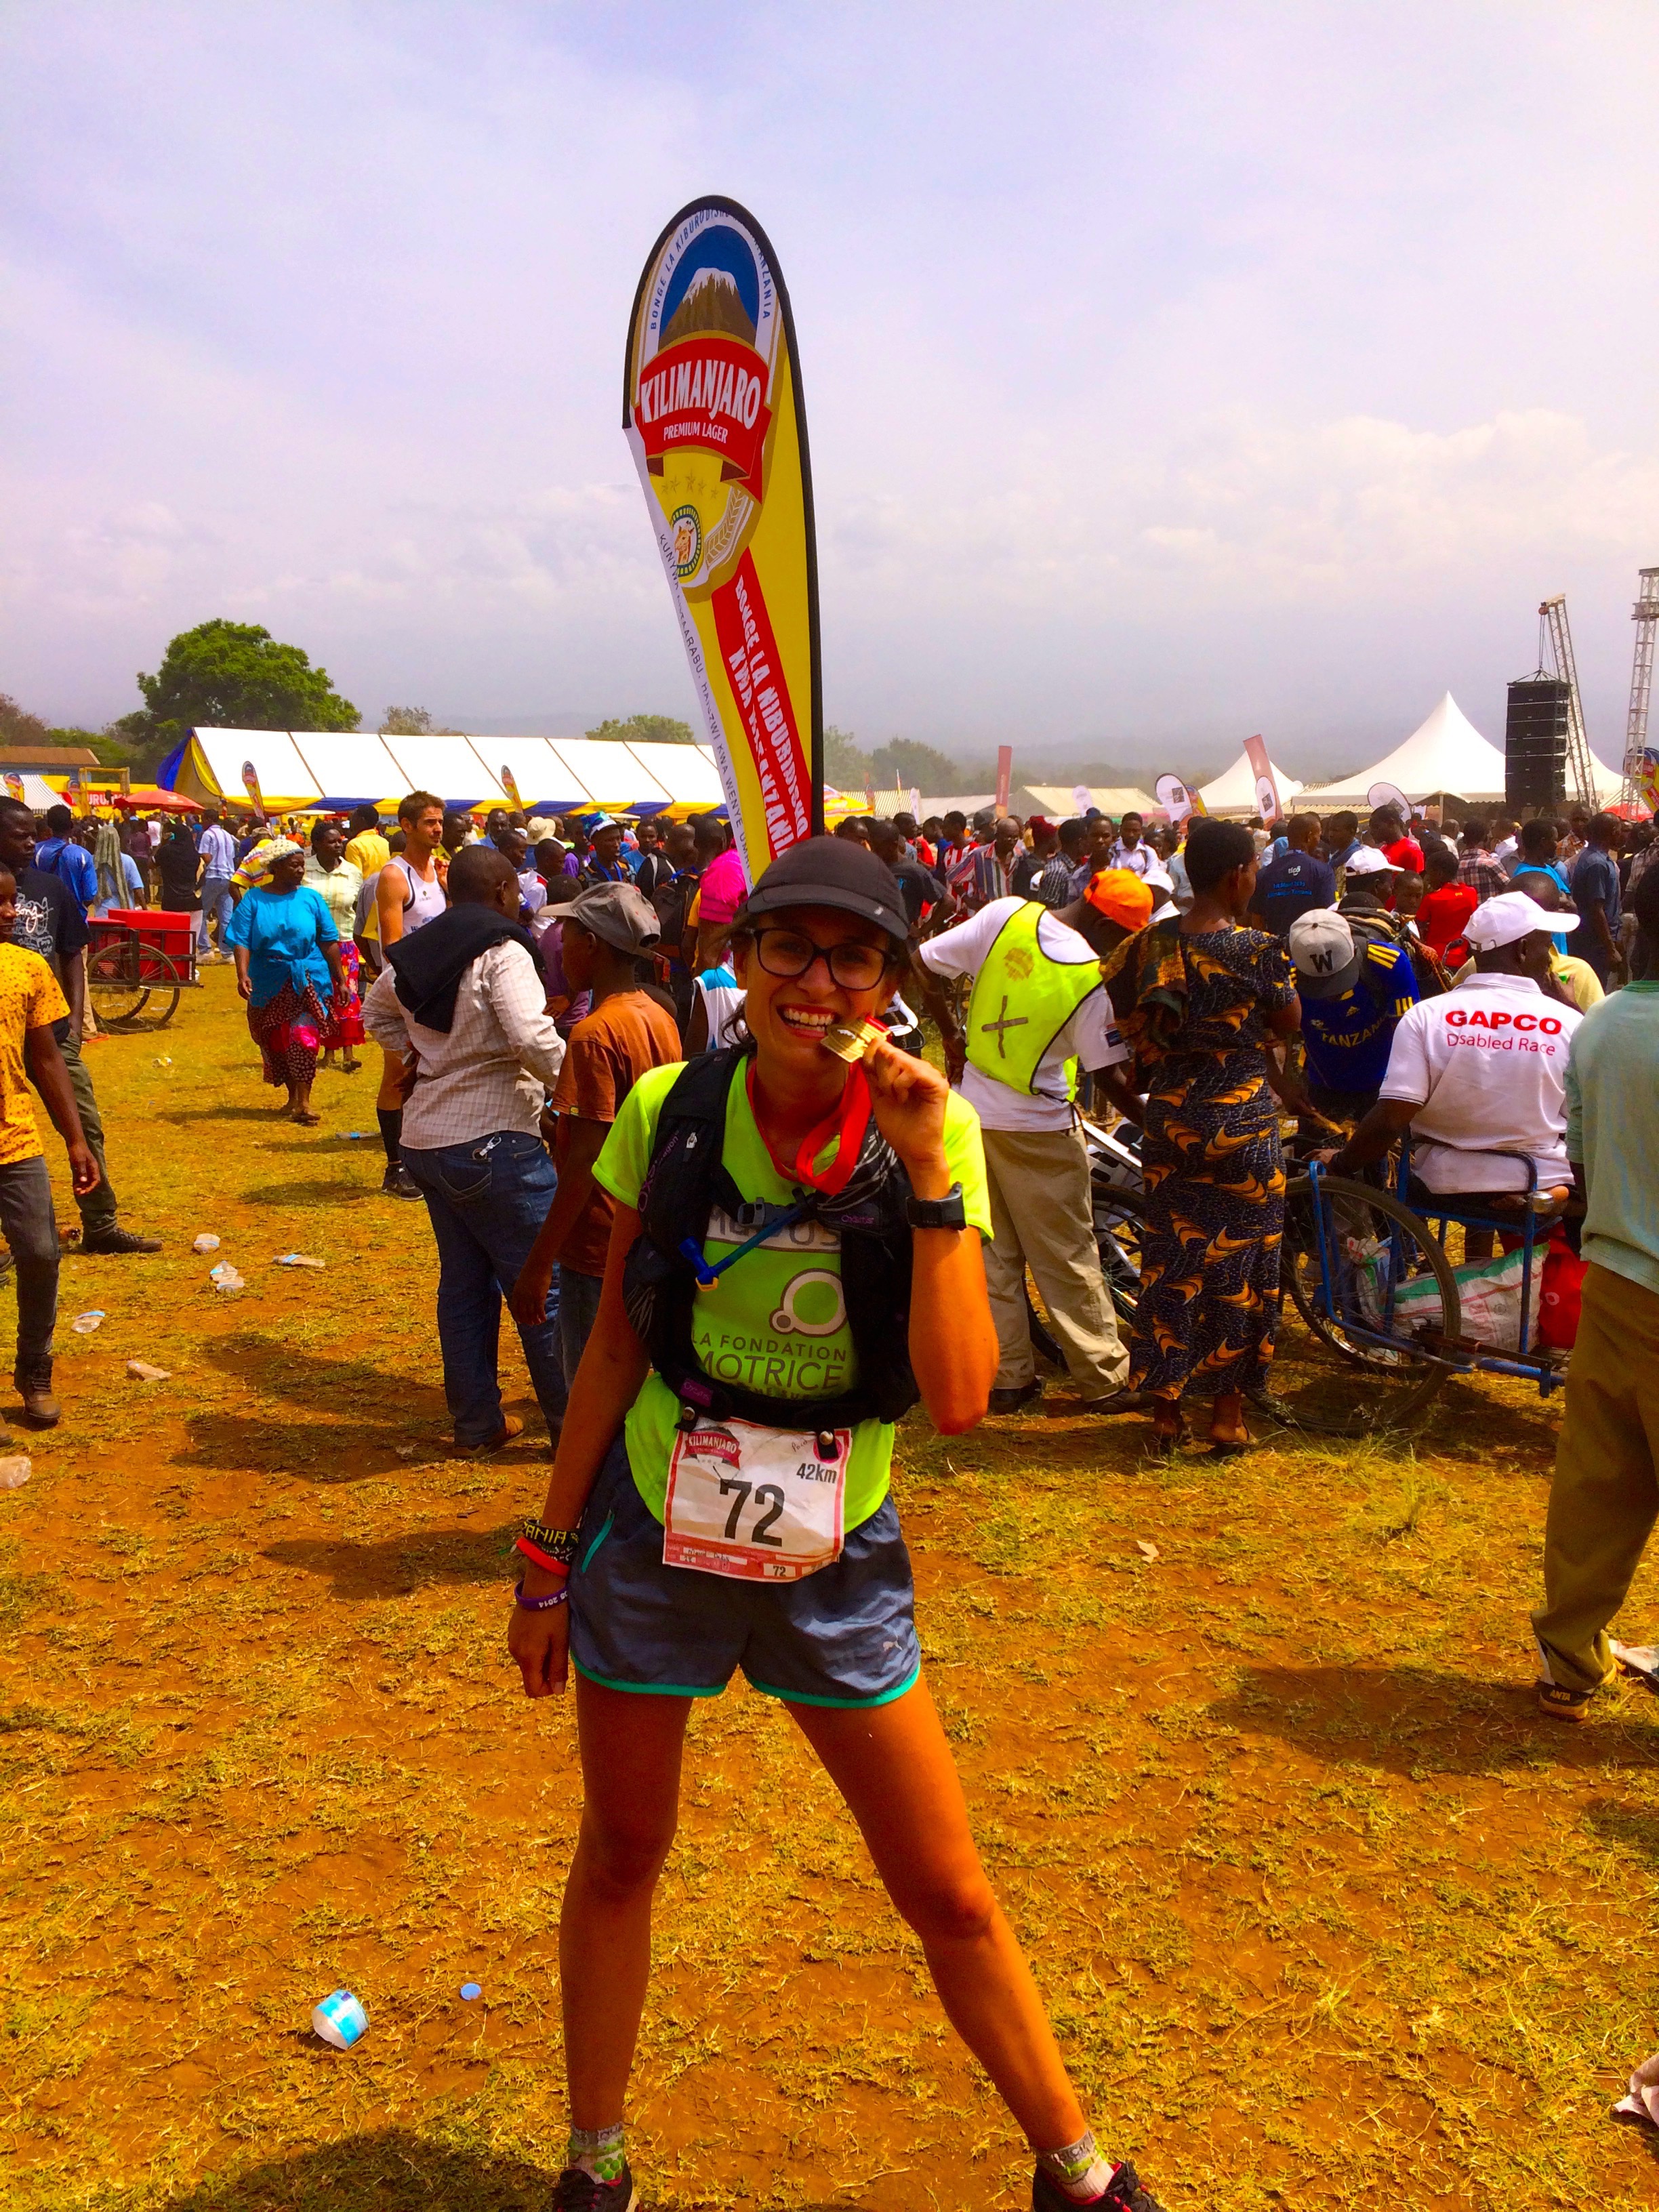 At the end of Kilimanjaro marathon